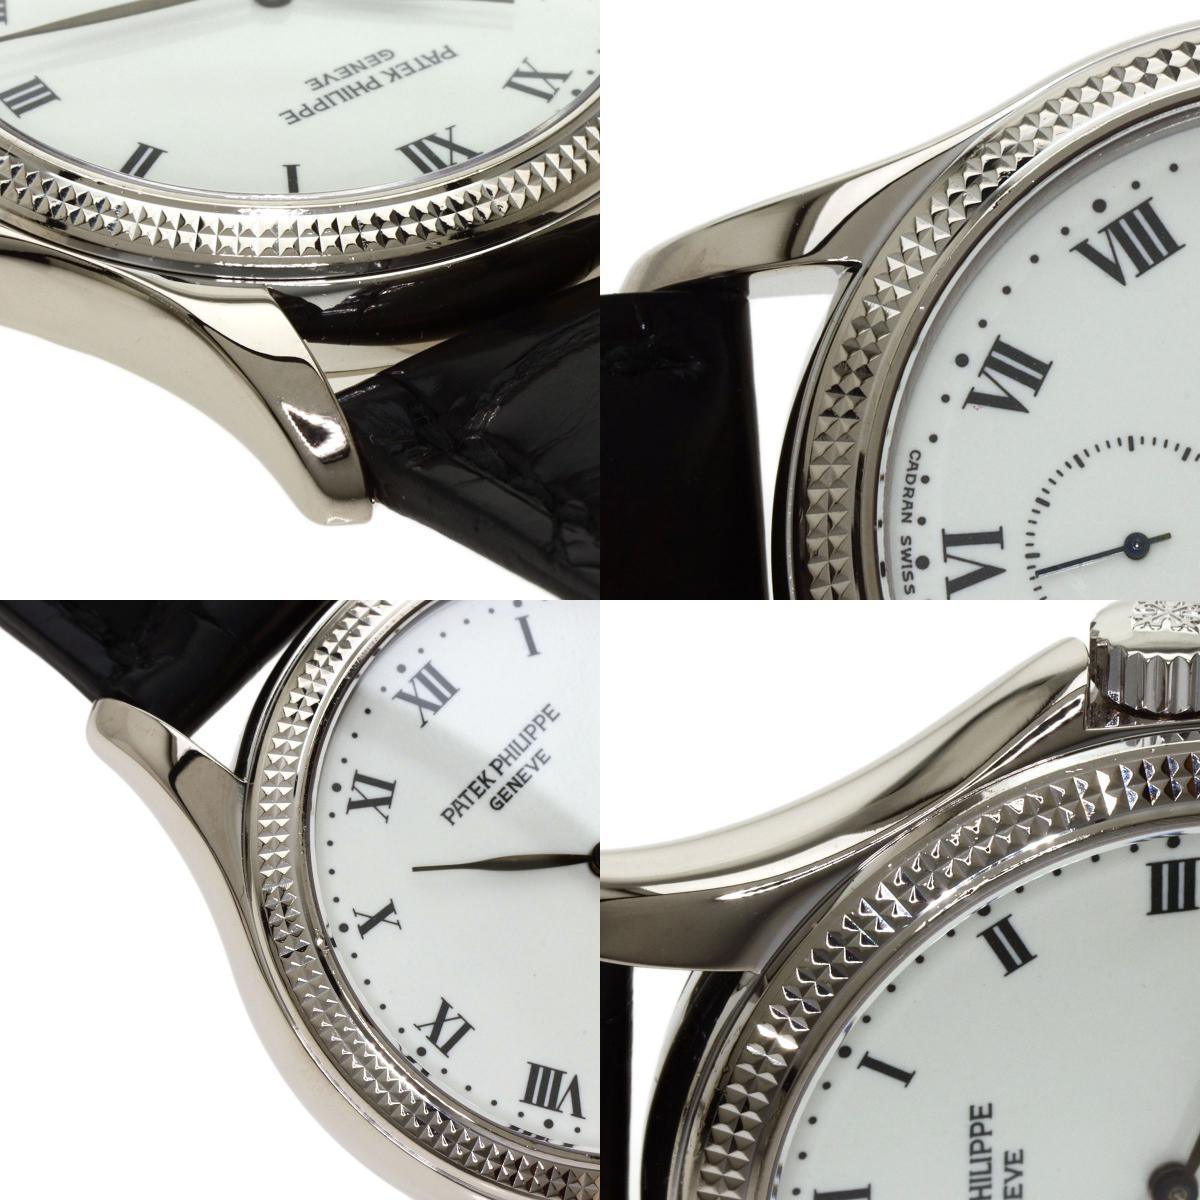 Patek Philippe Calatrava 5115G-001 watch K18 white gold leather men's used - Murphy Johnson Watches Co.